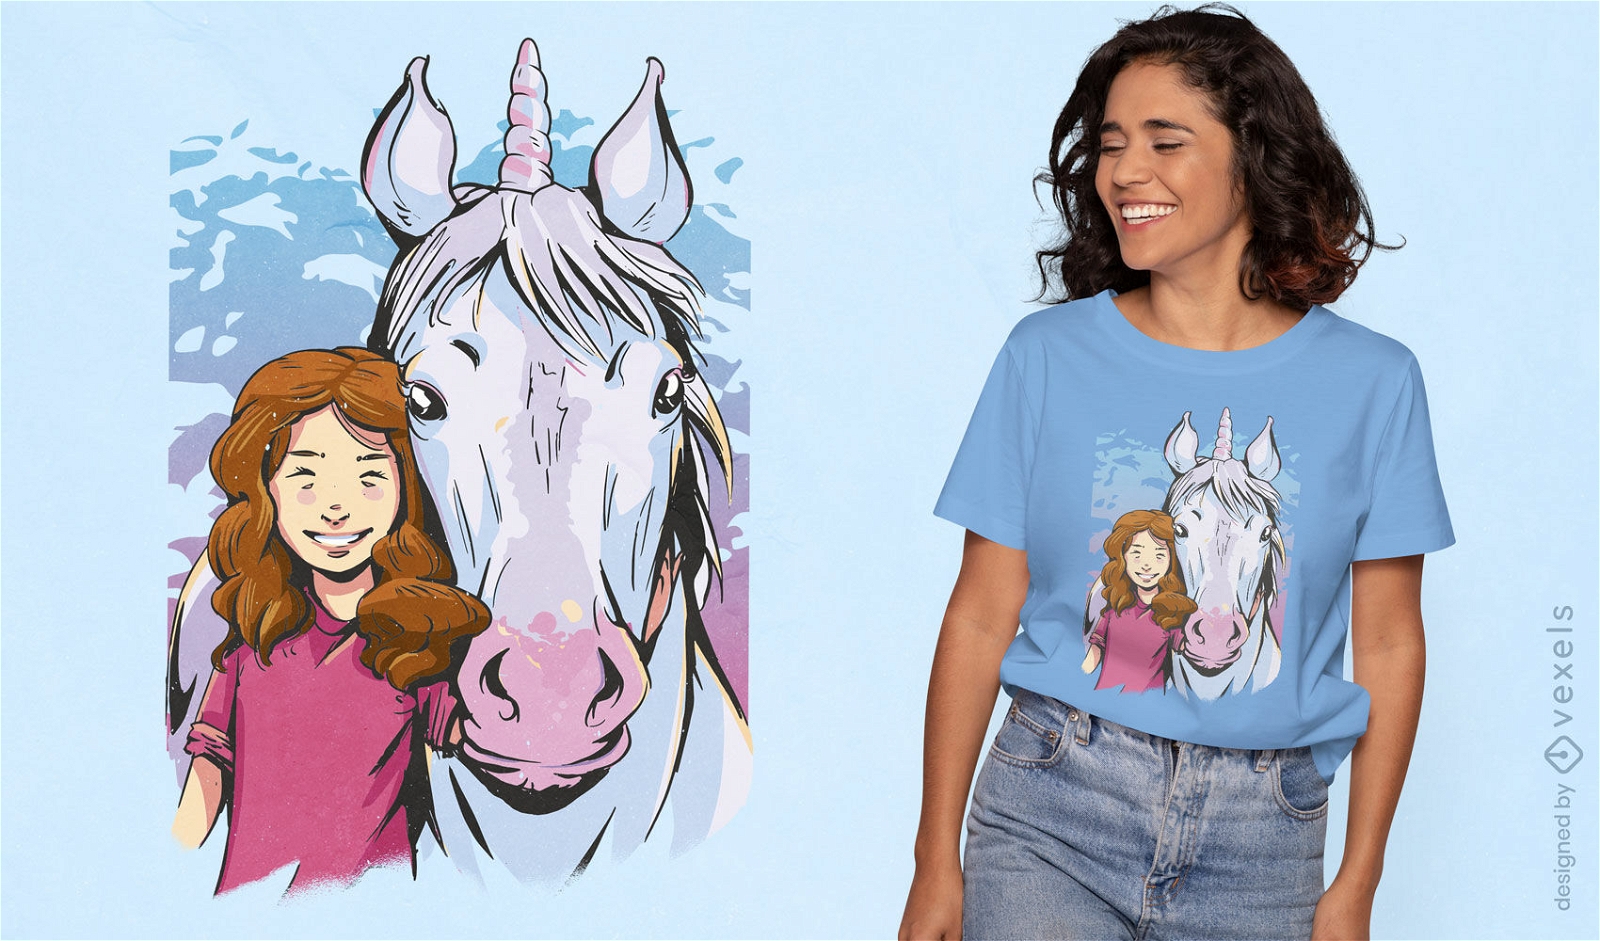 Dise?o de camiseta de ni?a feliz y unicornio.